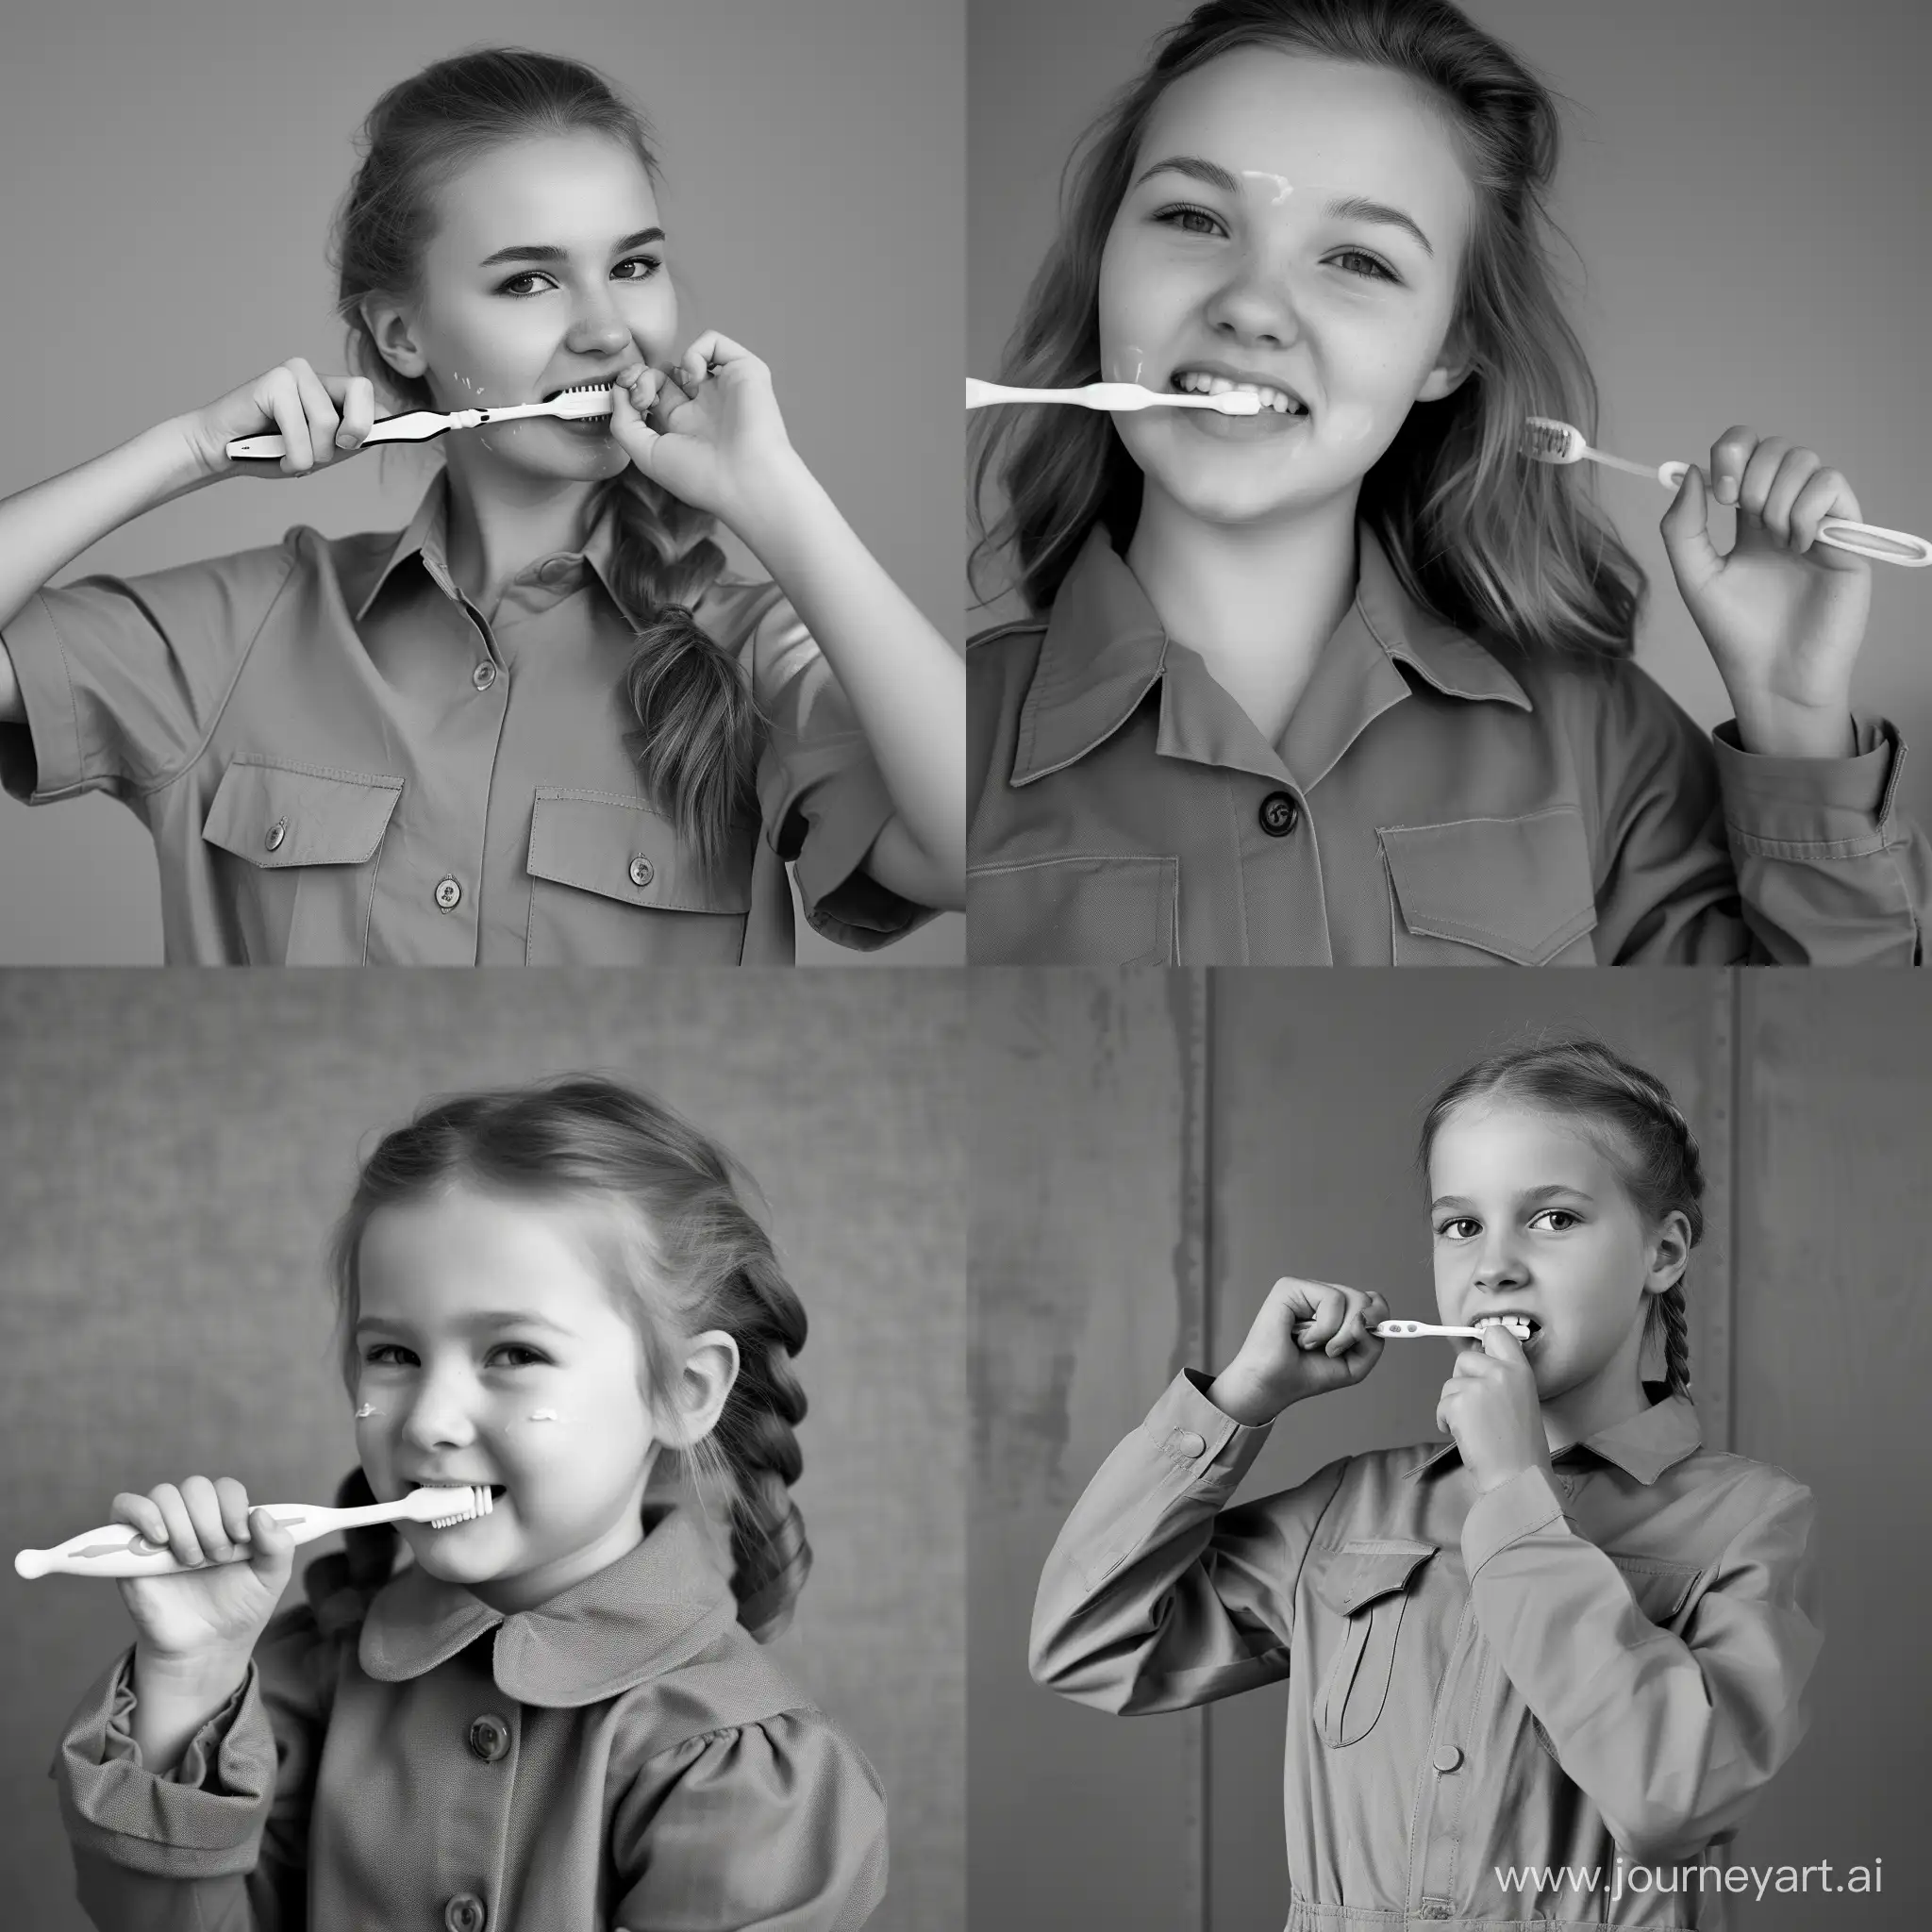 a cute beautiful girl brushing her teeth, black and white photo, gray uniform background